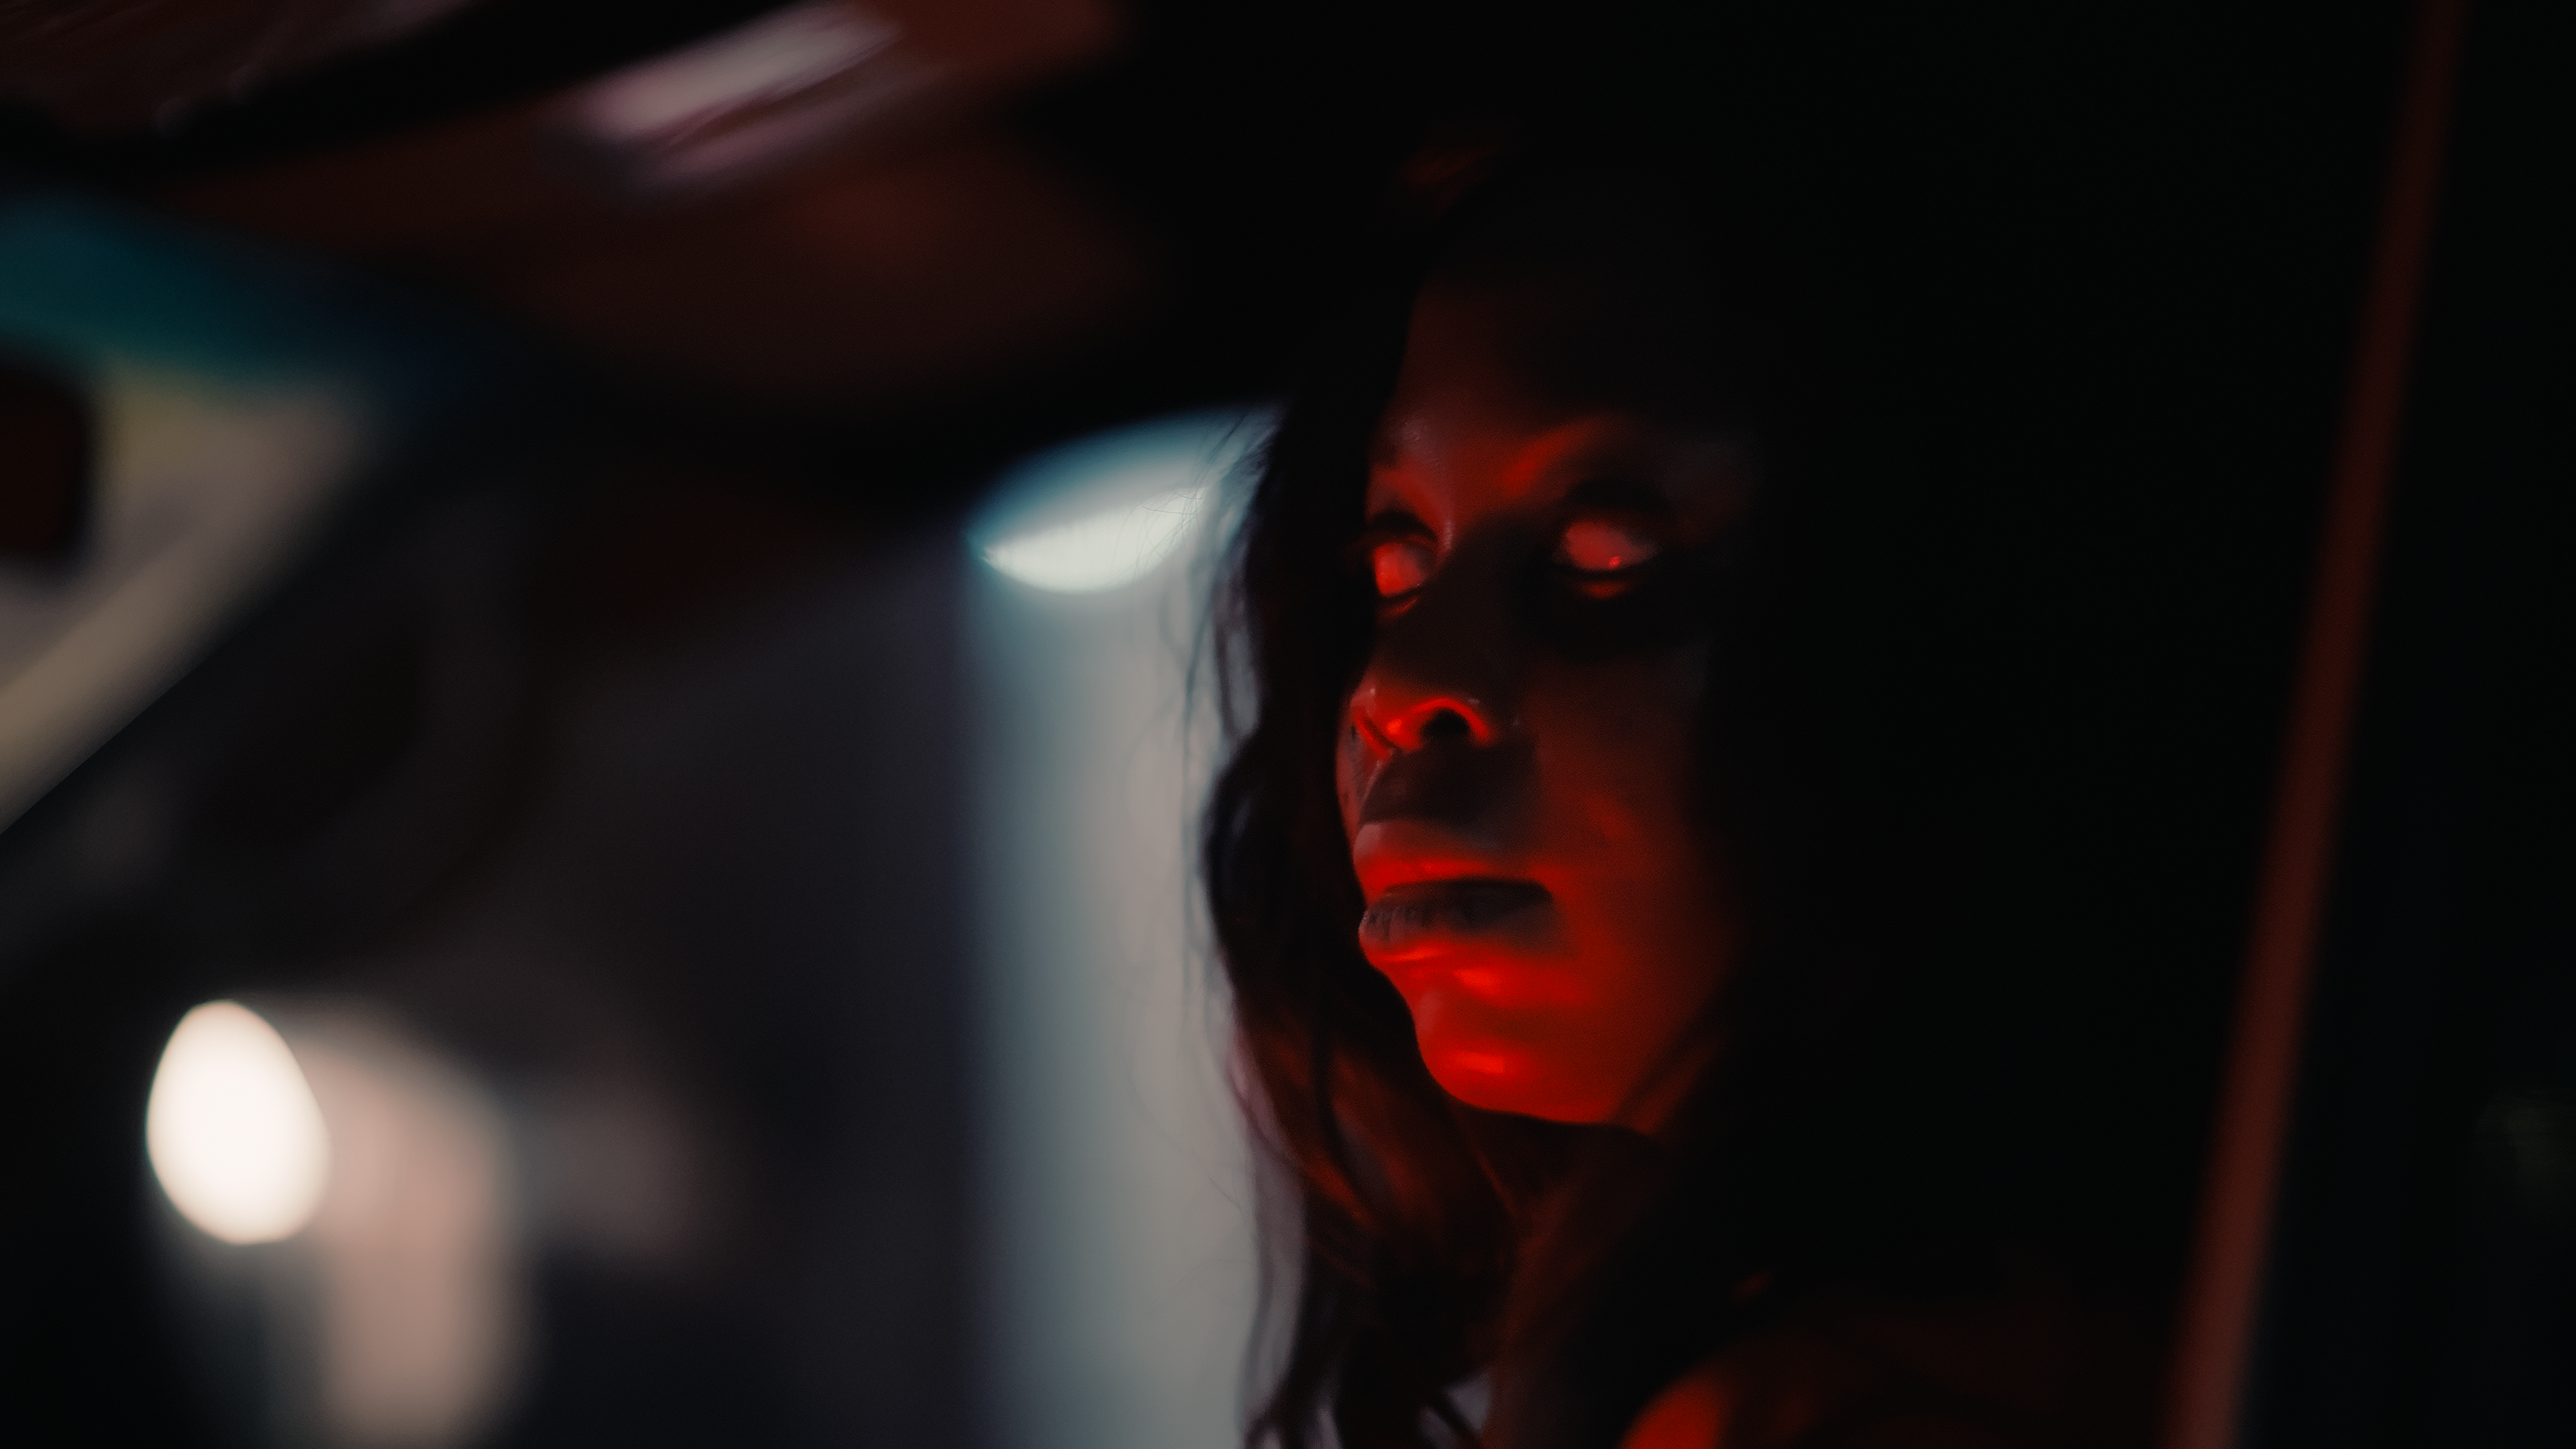 dream still 1.129.1 - Chioma Paul-Dike's Horror Short Film "Dreams" To Screen at AFRIFF 2023